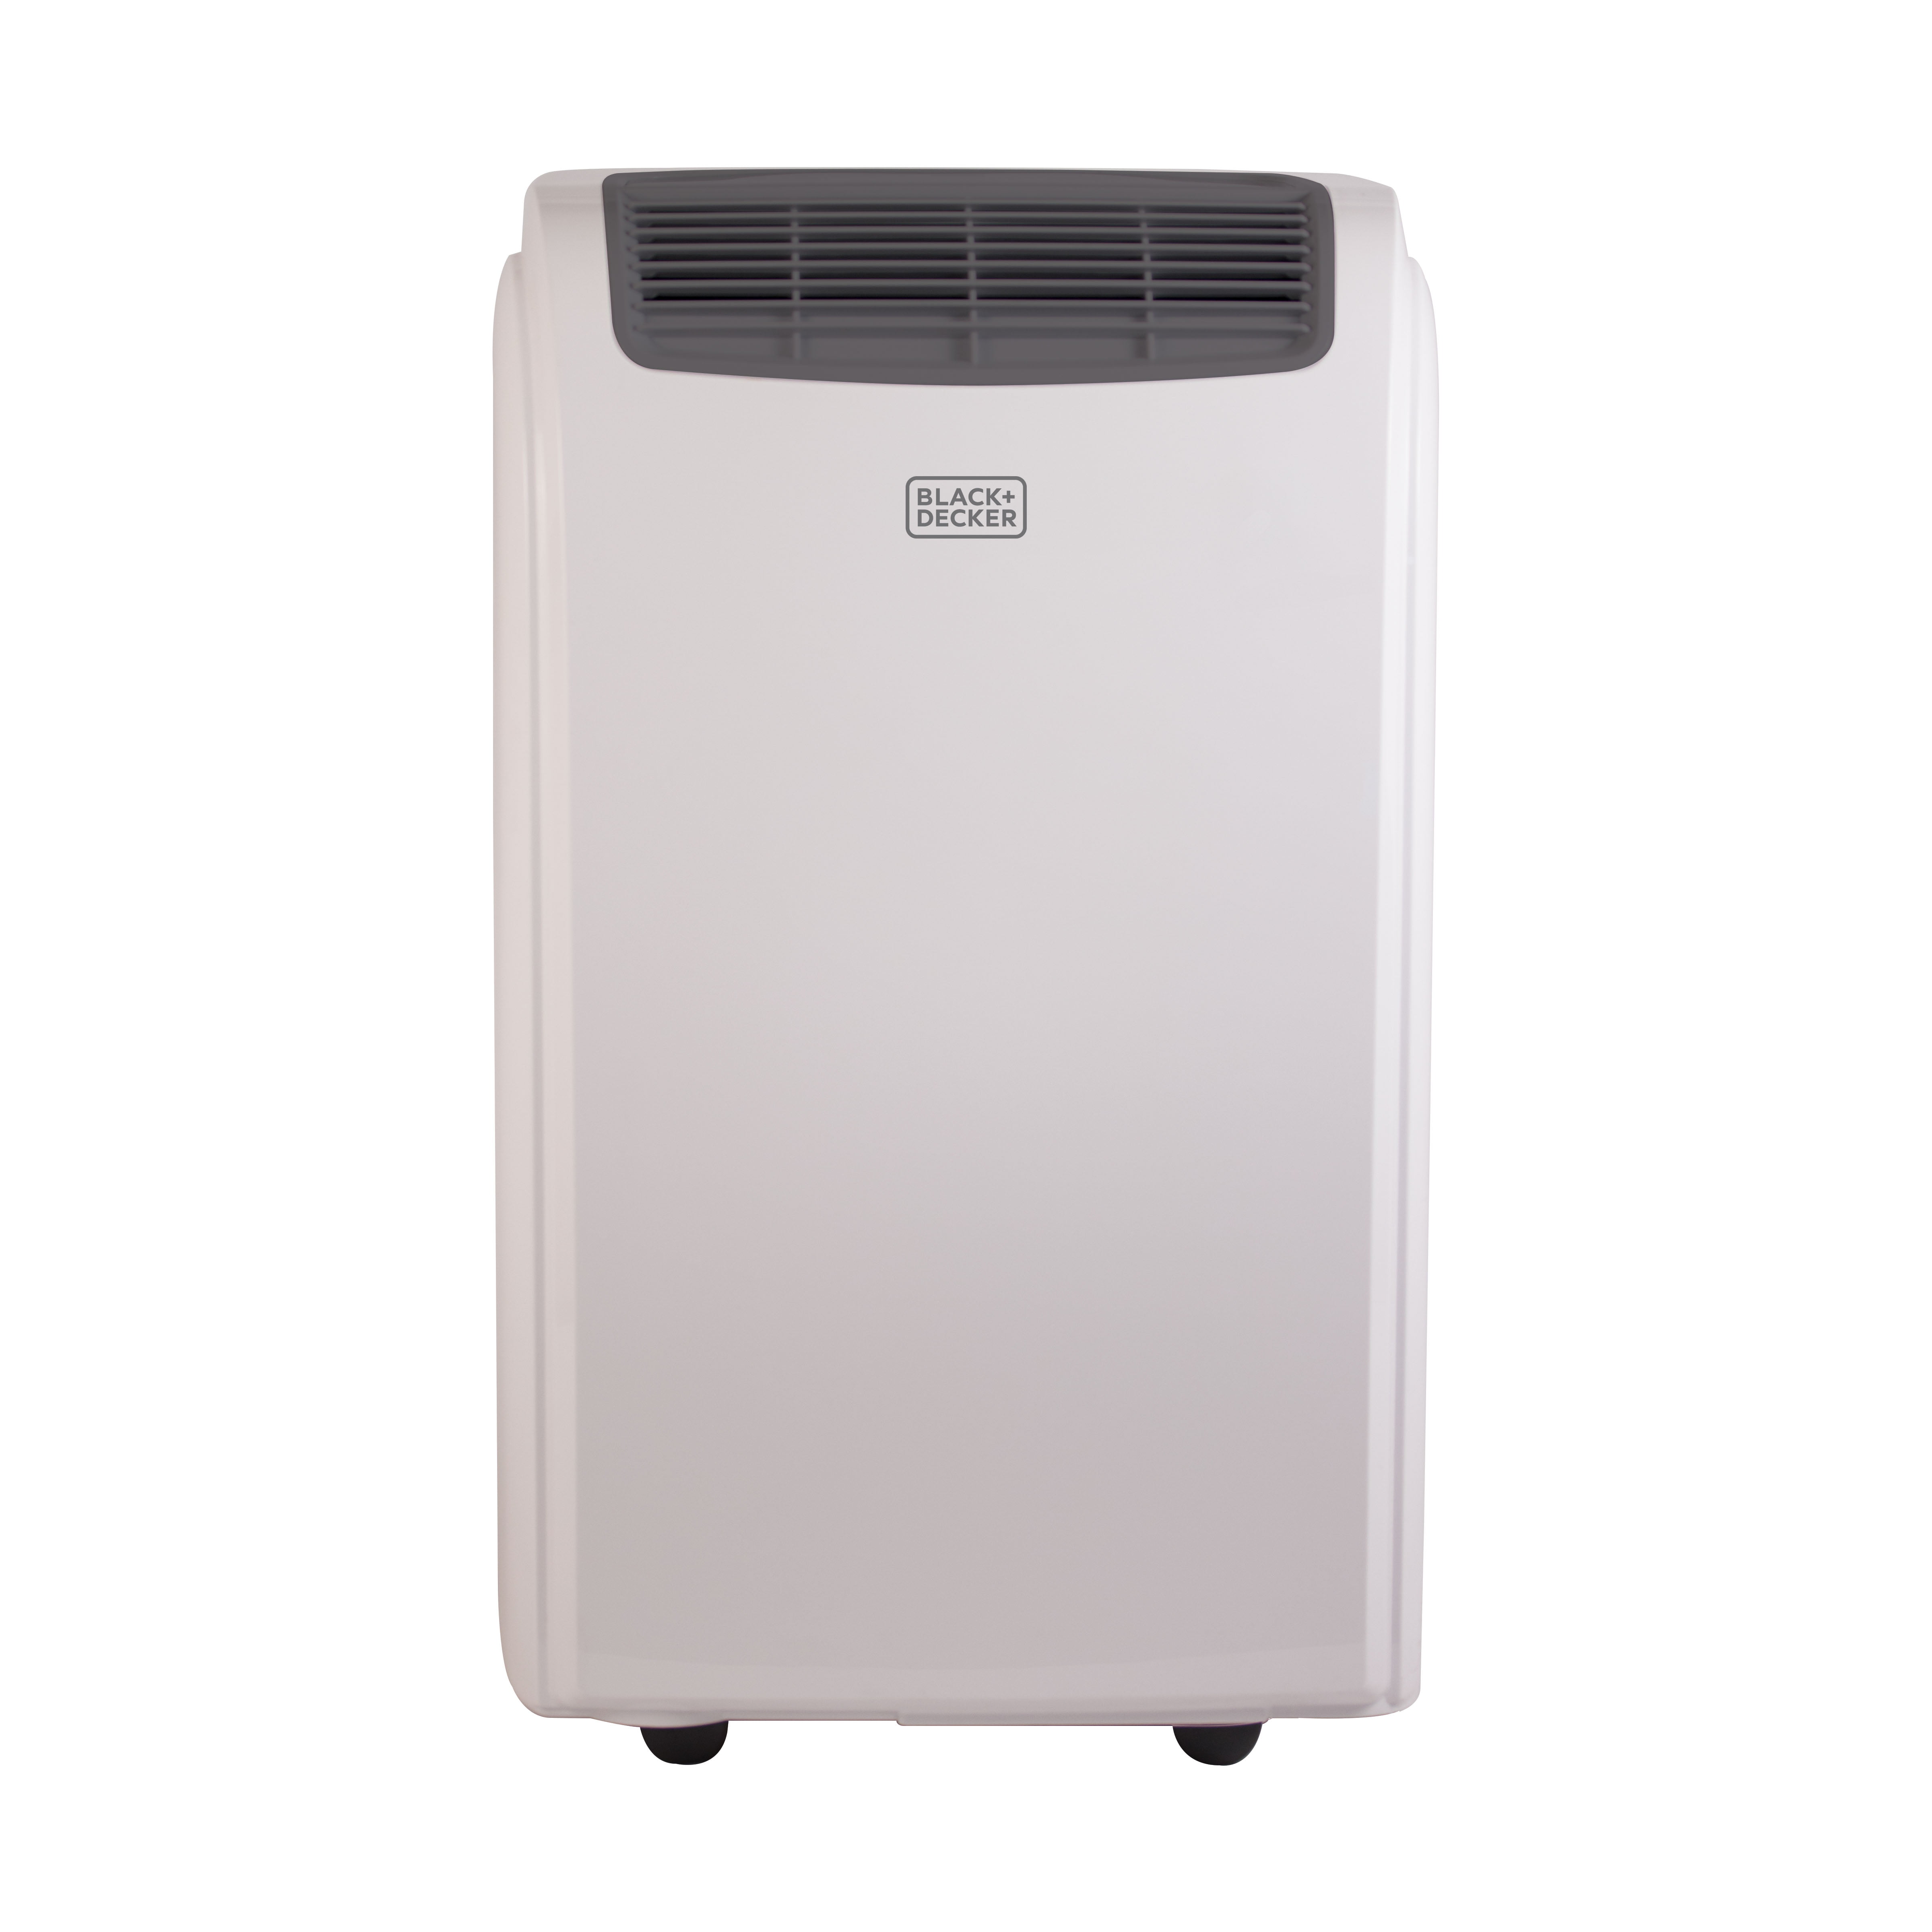 Photo 1 of BLACK+DECKER 8,000 BTU DOE (14,000 BTU ASHRAE) Portable Air Conditioner with Remote Control, White
**BLOWS ICE COLD**